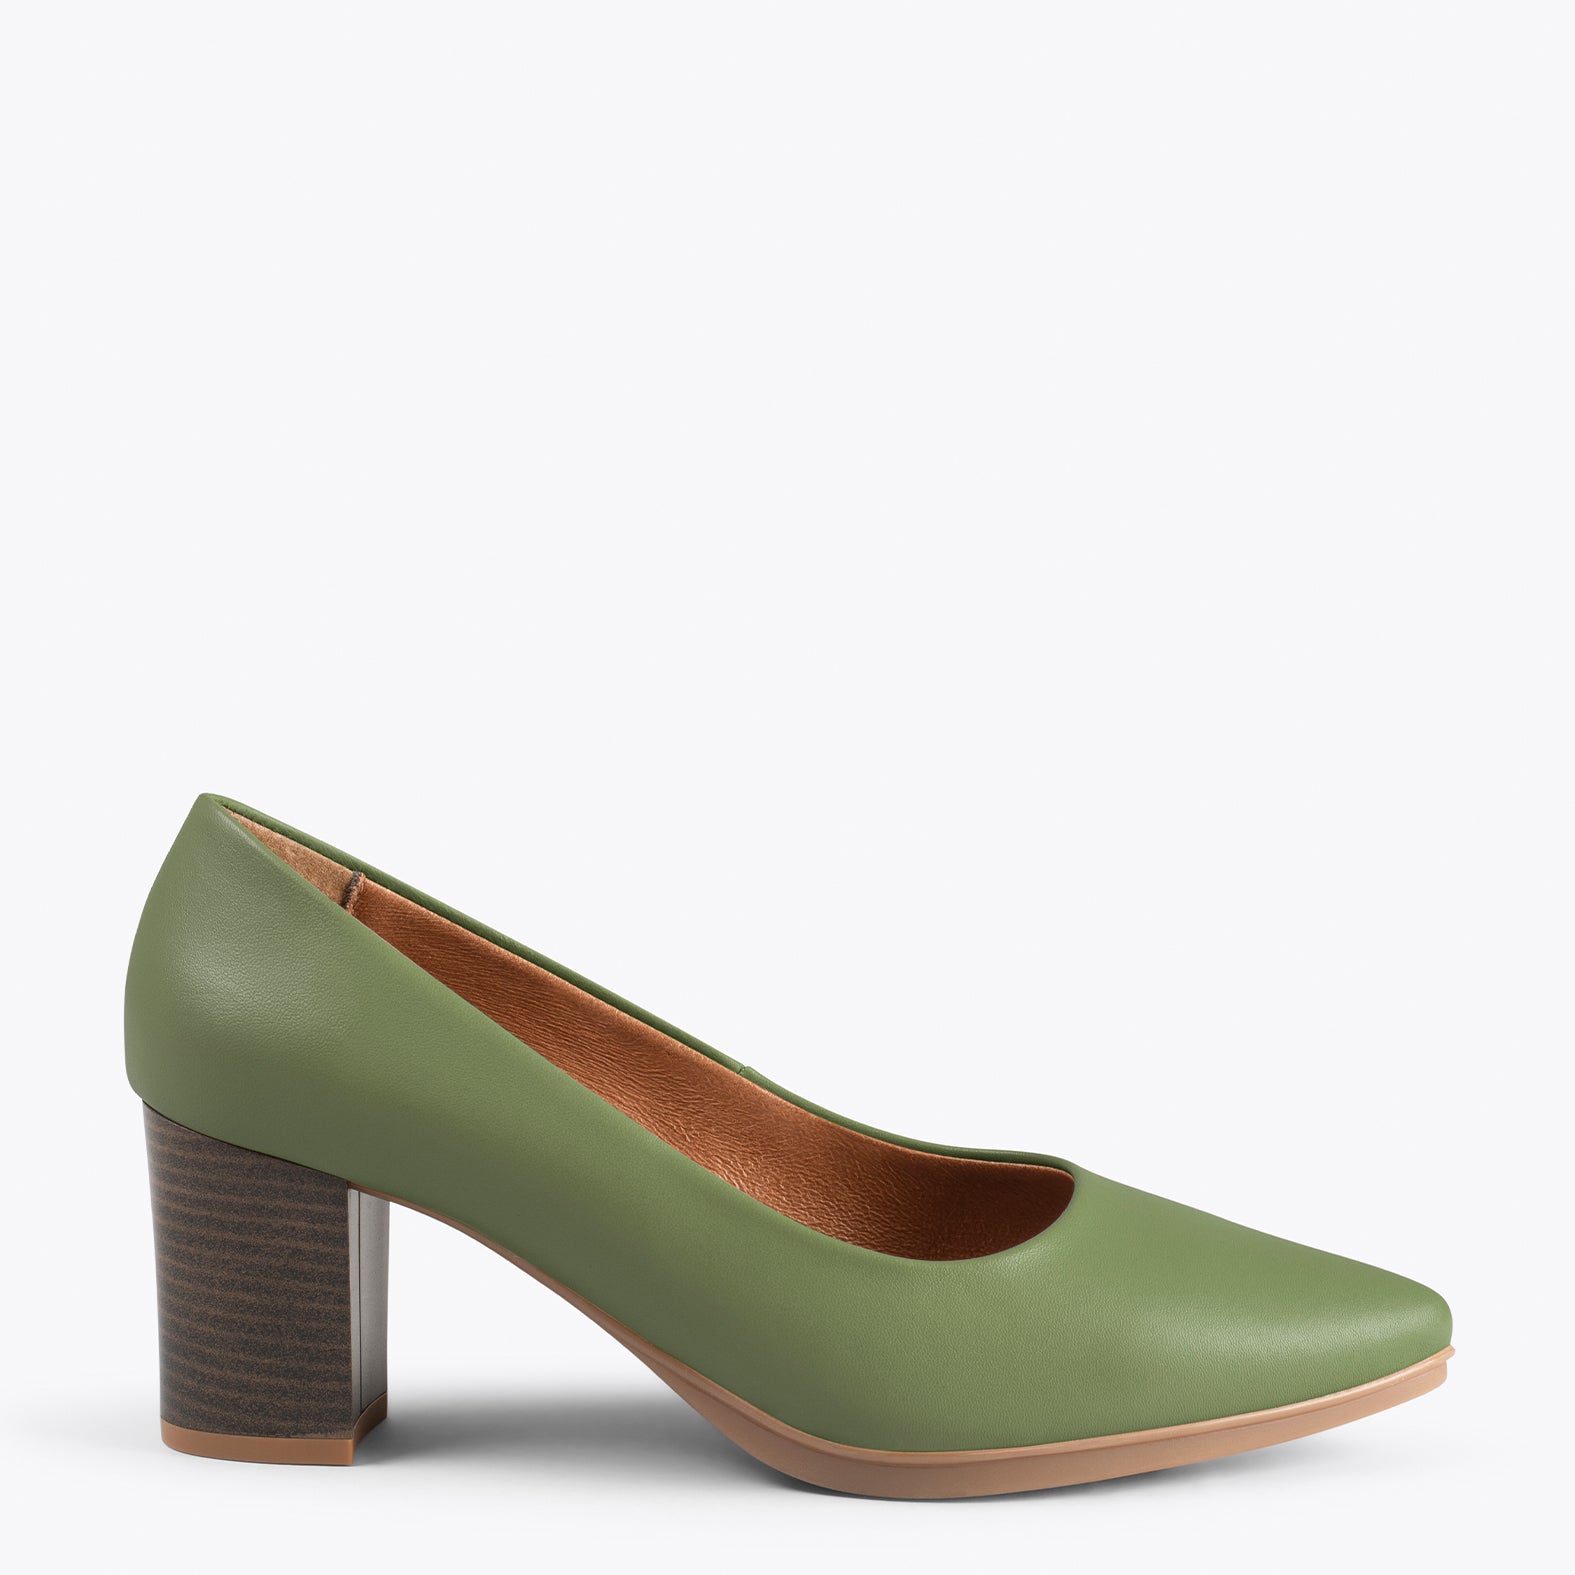 Sandals - Belinda-22 - khaki - High Heels Shop by Fuss-Schuhe